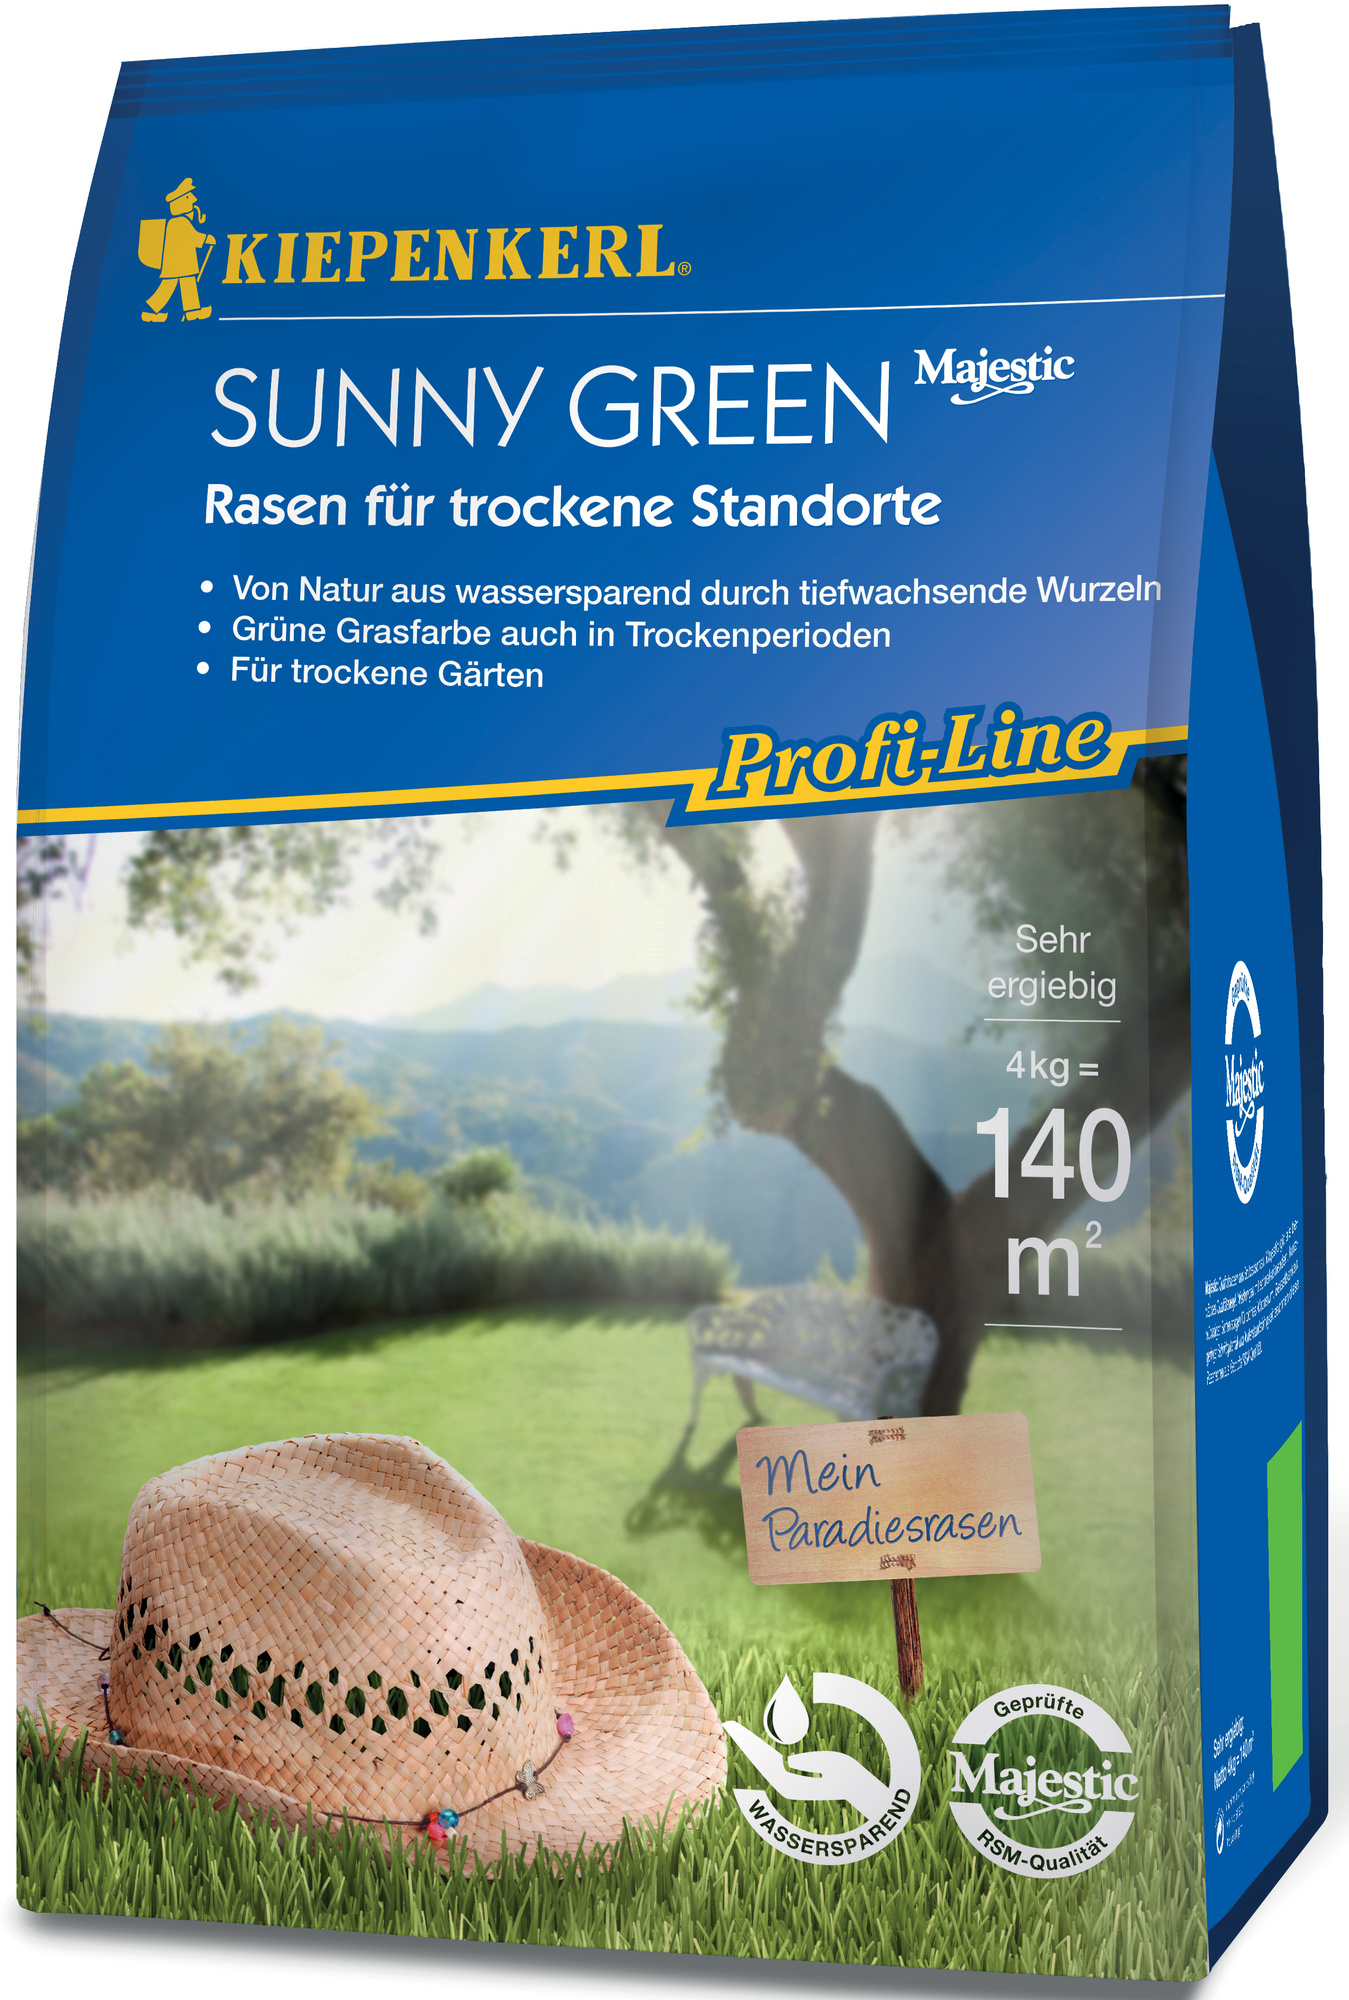 Profi-Line Sunny Green Rasen für trockene Standorte, 4 kg